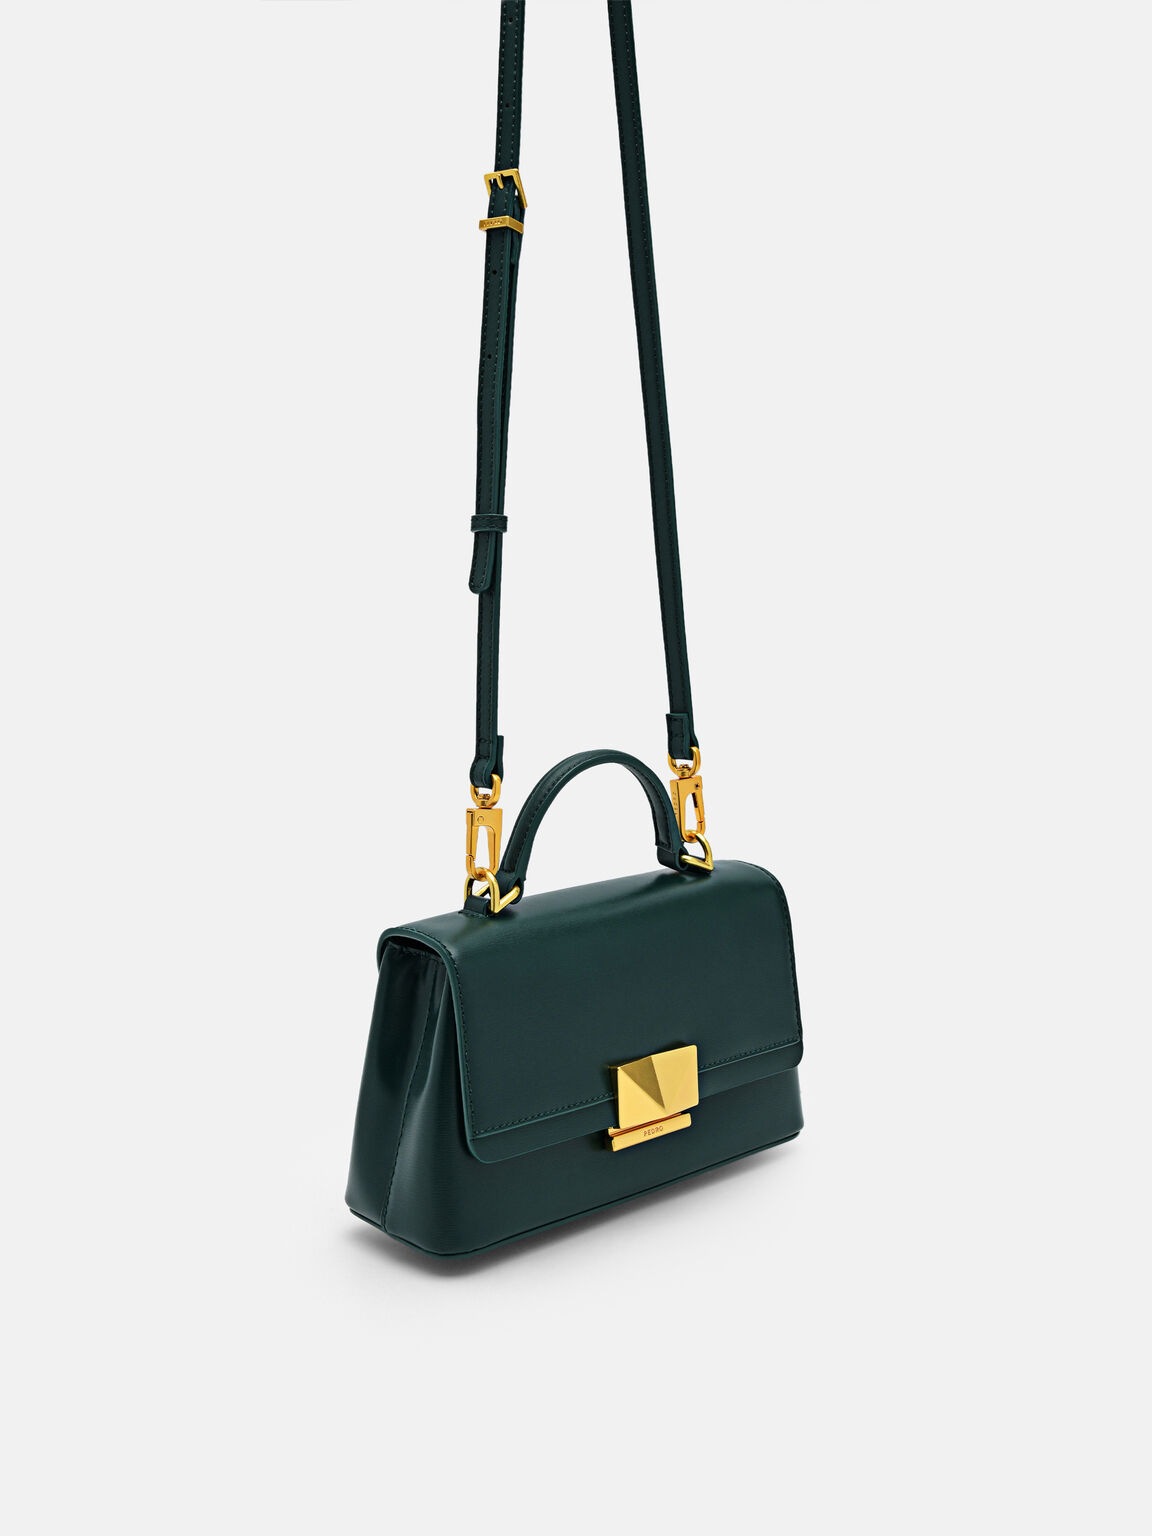 PEDRO Studio Pixel Leather Mini Shoulder Bag, Dark Green